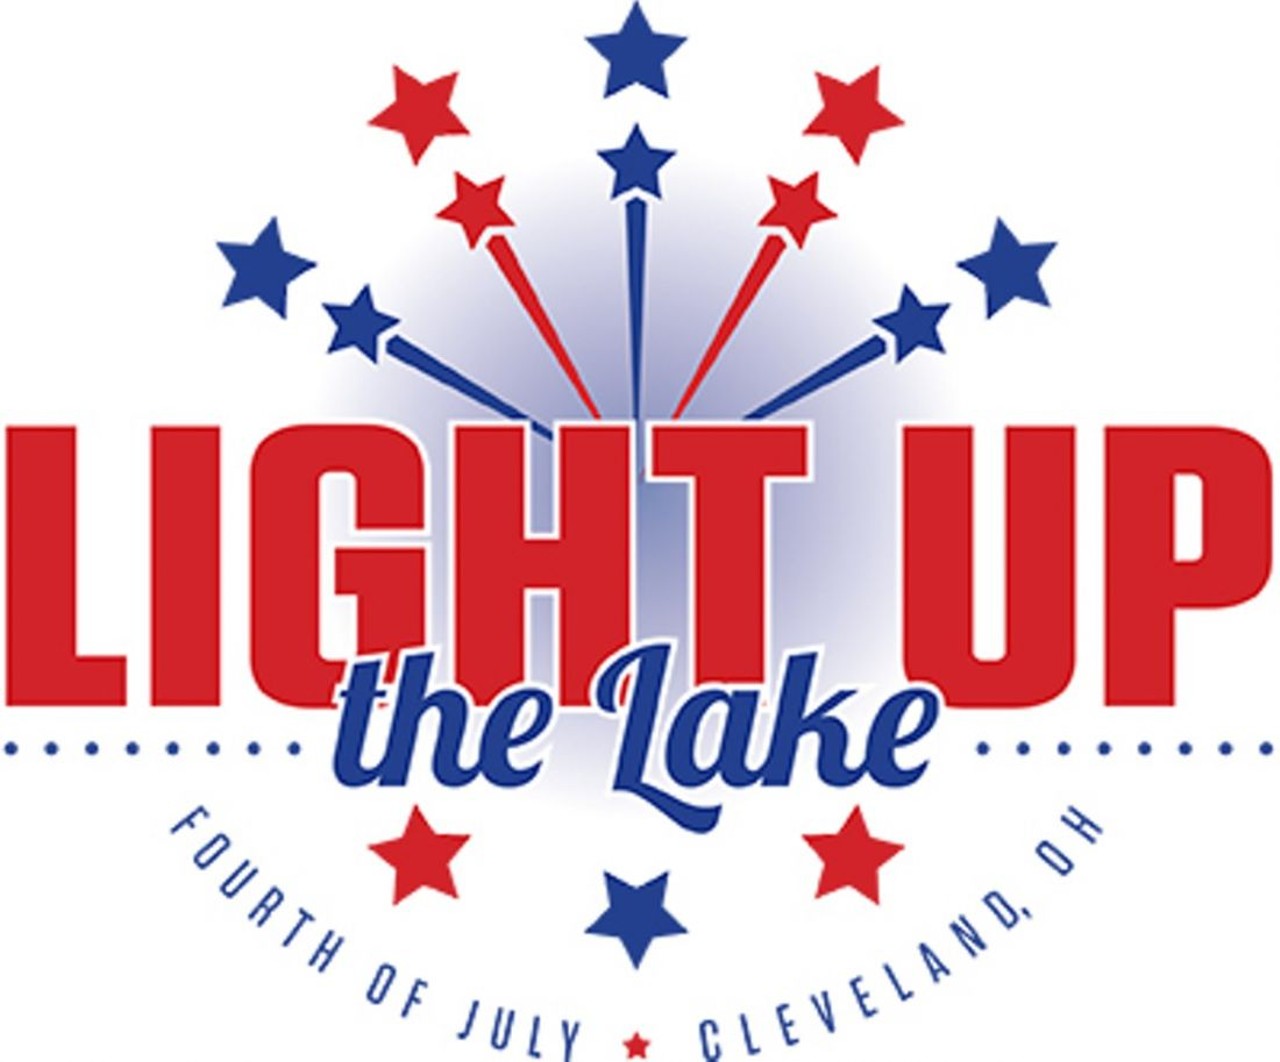  Cleveland Light Up the Lake
Wed, July 4
Photo Provided